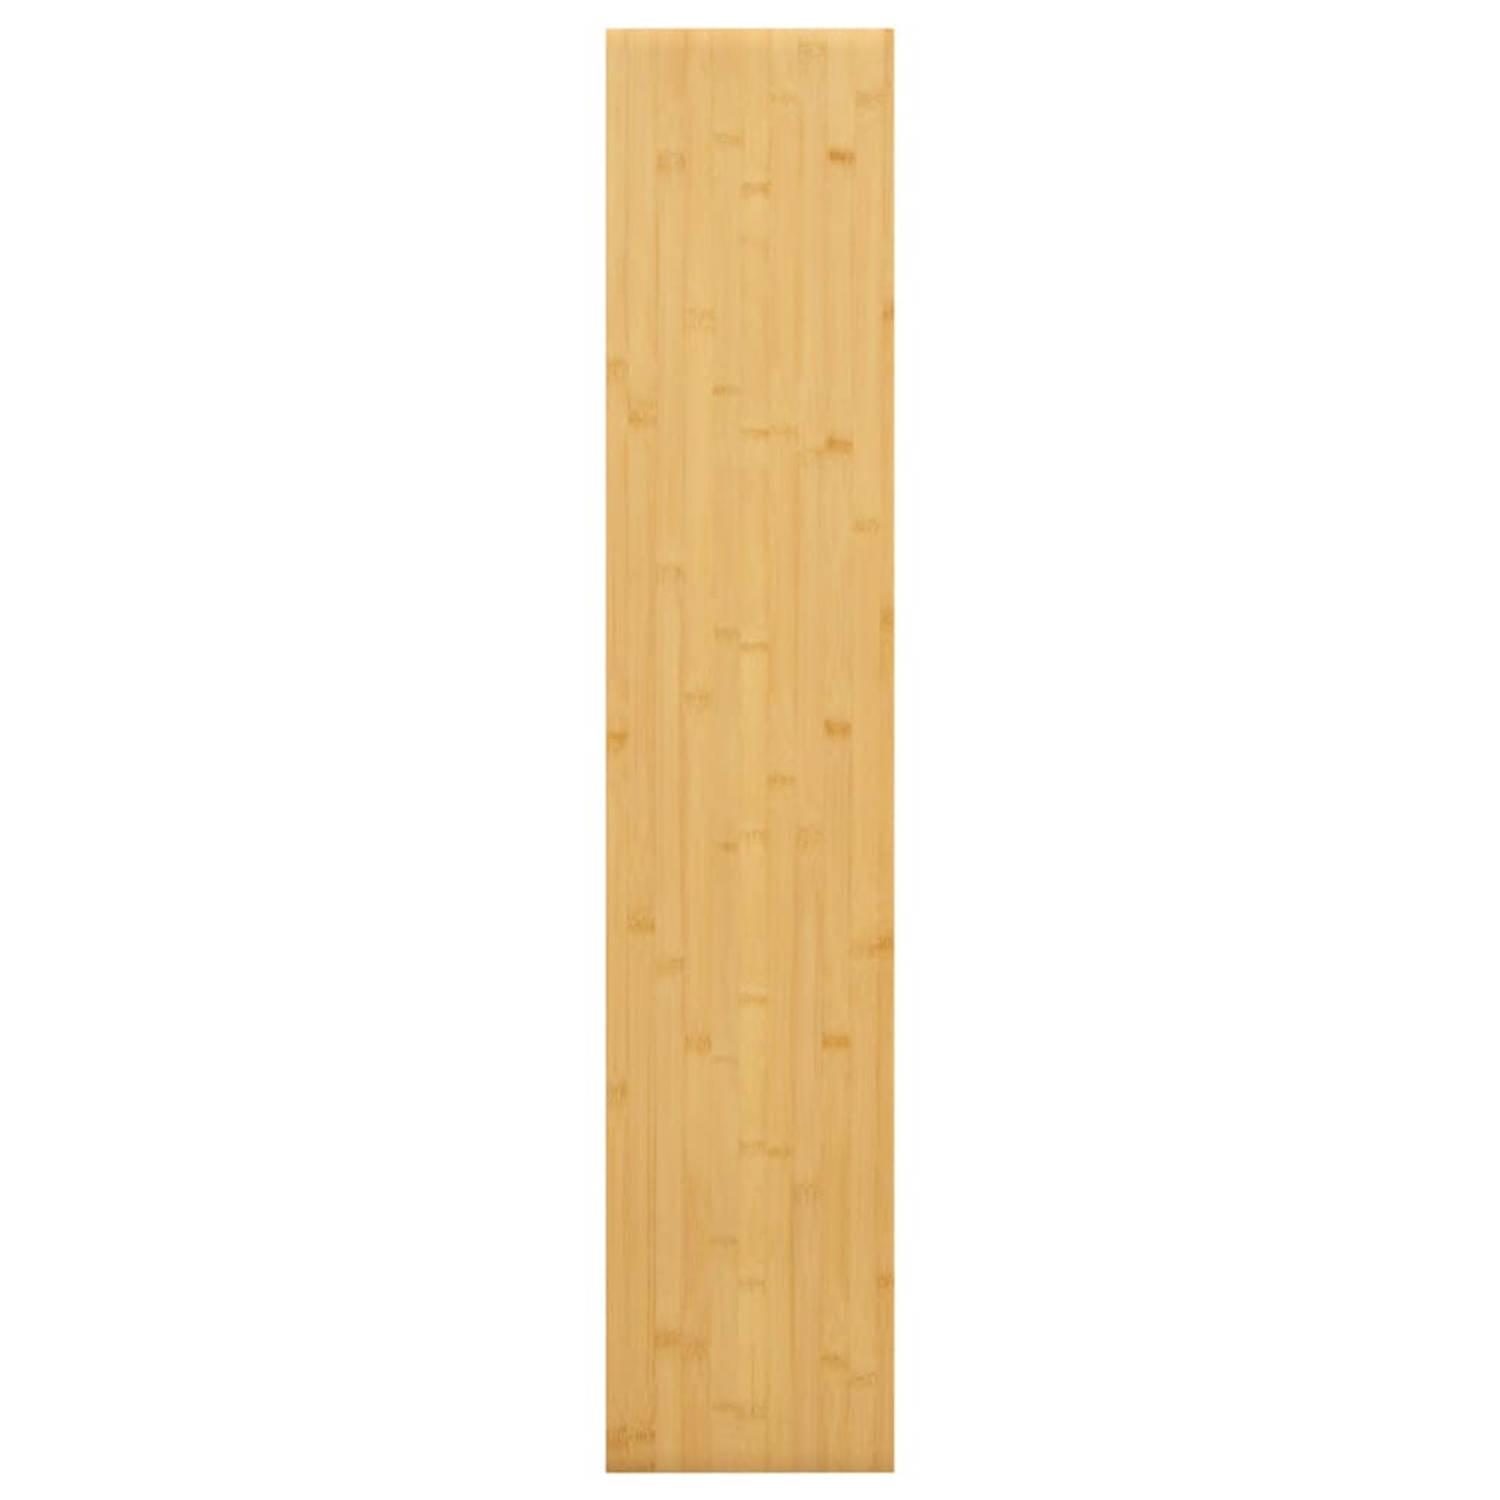 The Living Store Wandplank - Bamboe - 100 x 20 x 1.5 cm - Rustieke stijl